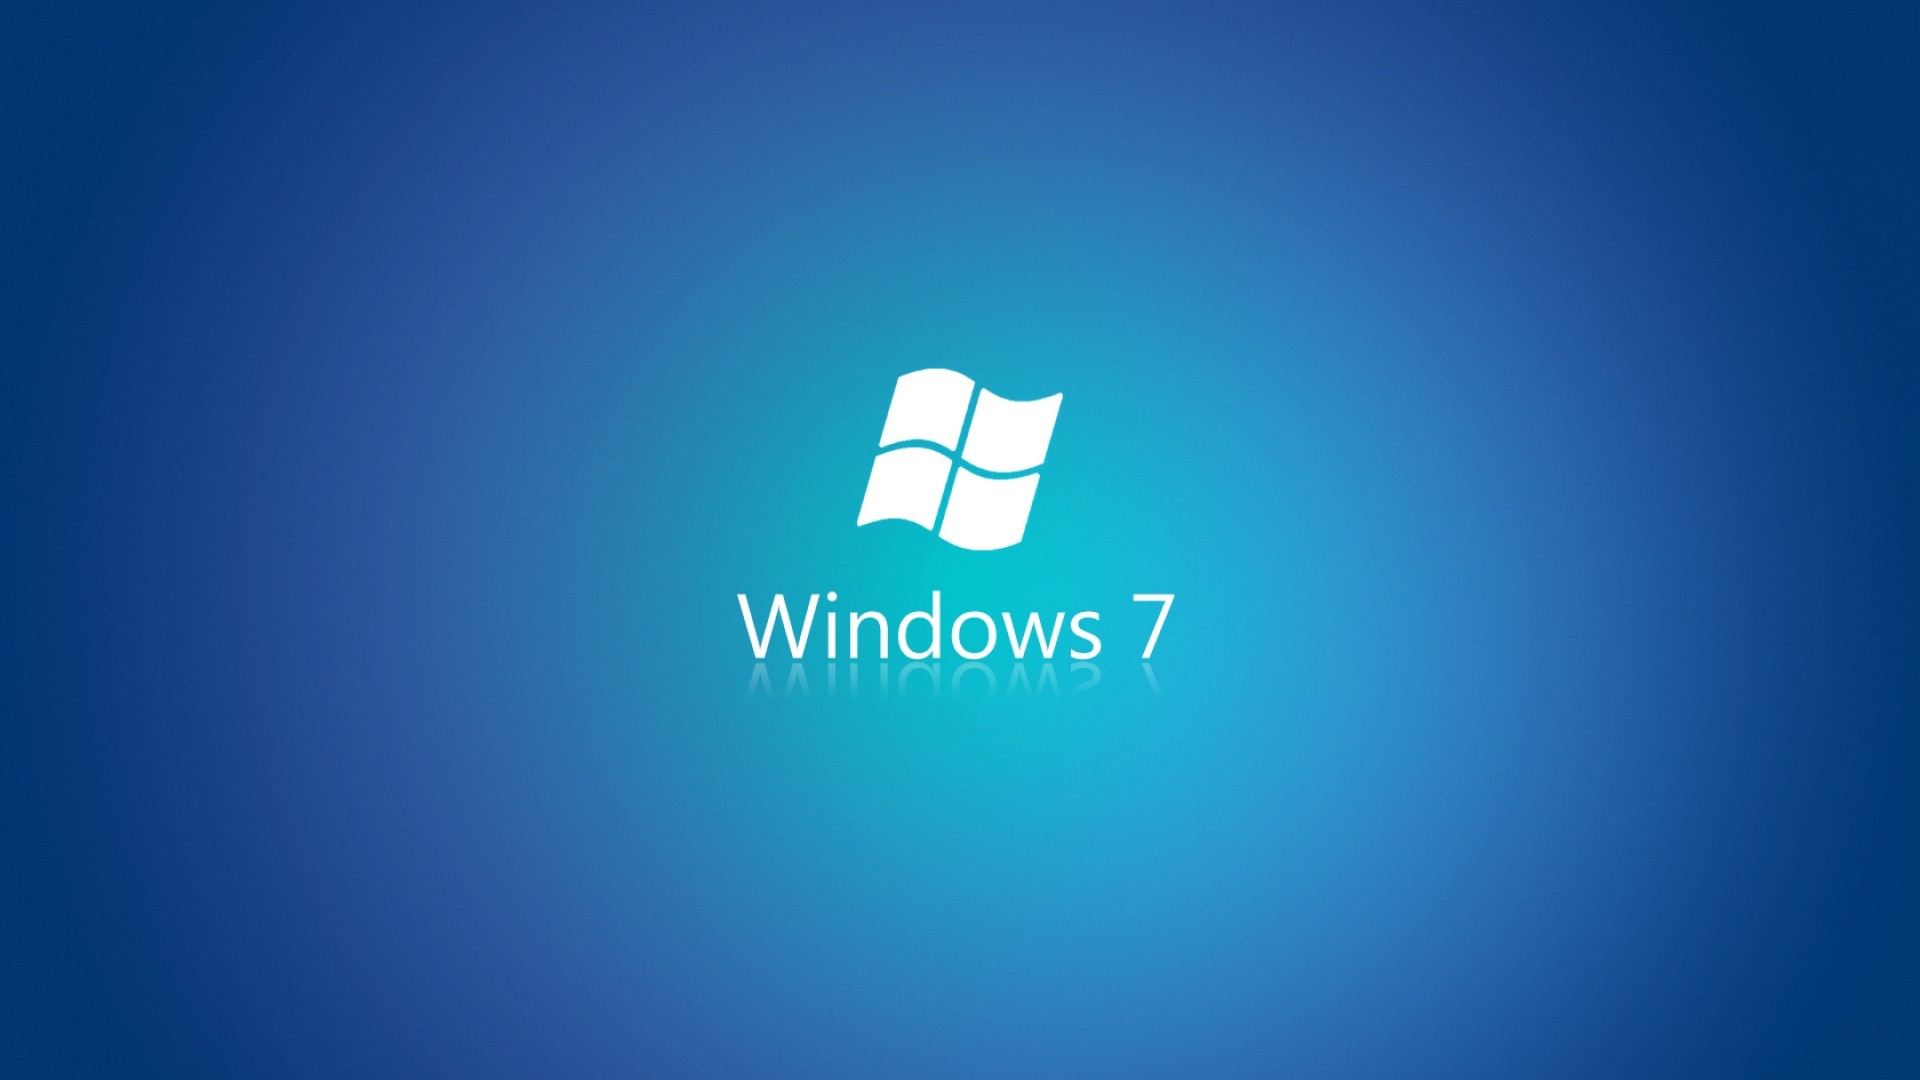 Windows 7 logo wallpaper   964506 1920x1080